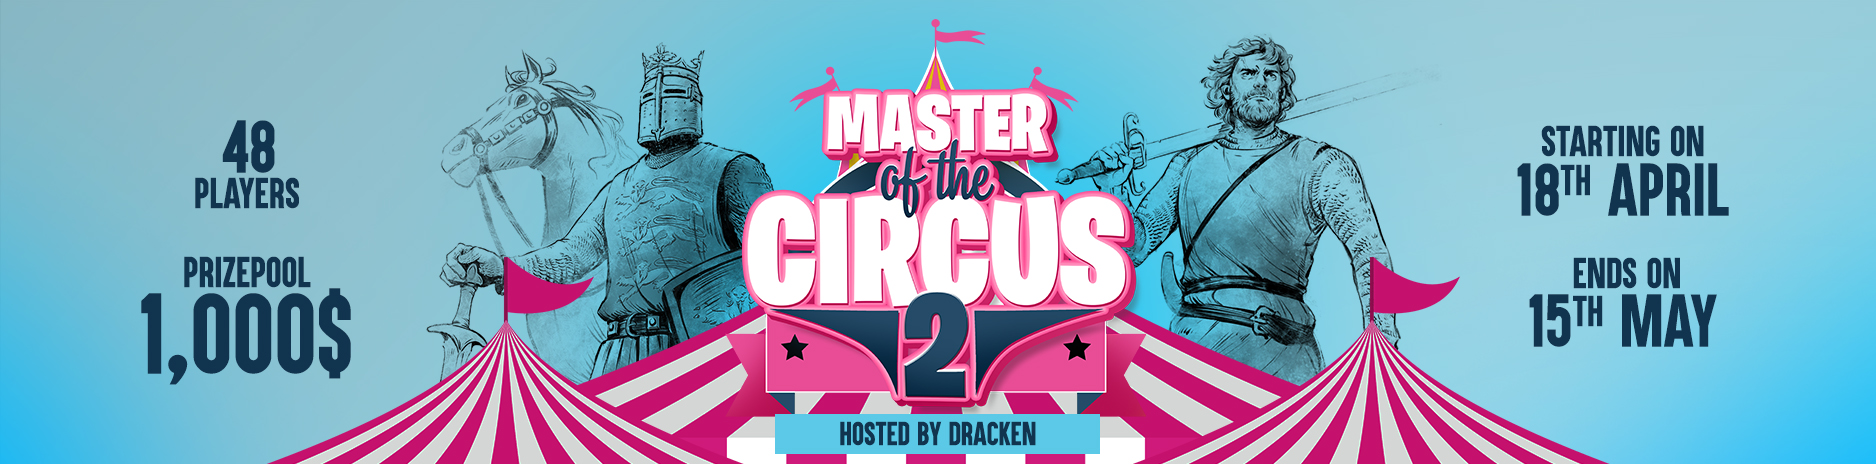 Master of Circus 2